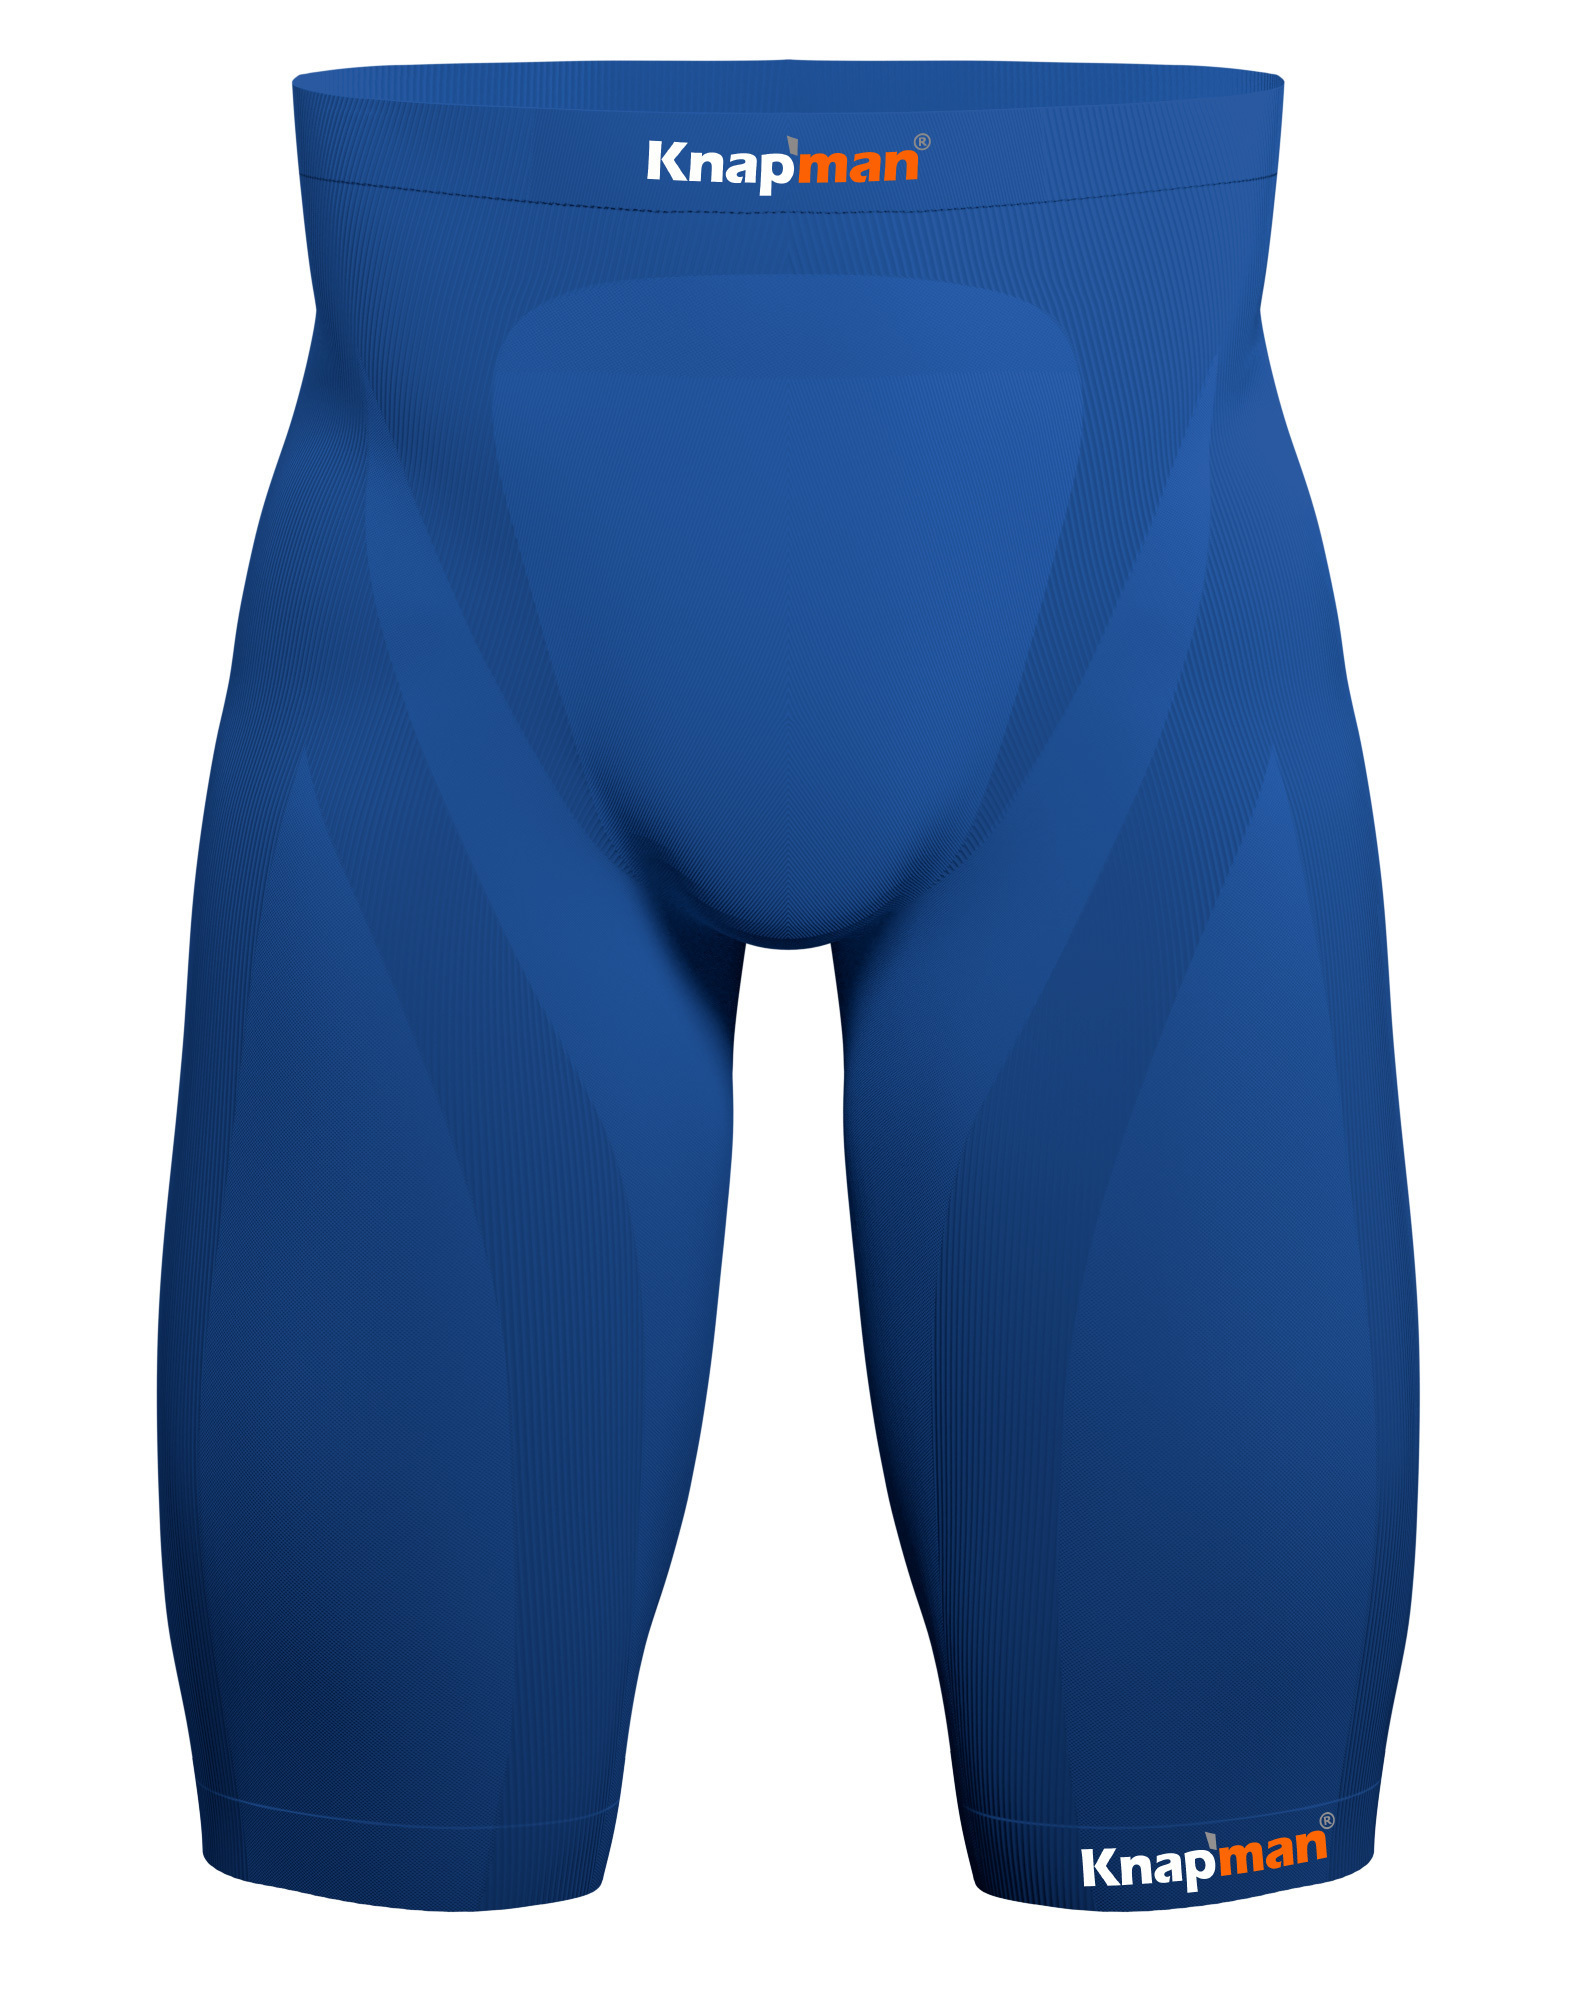 Knapman Mens Compression Shorts 45% royal blue